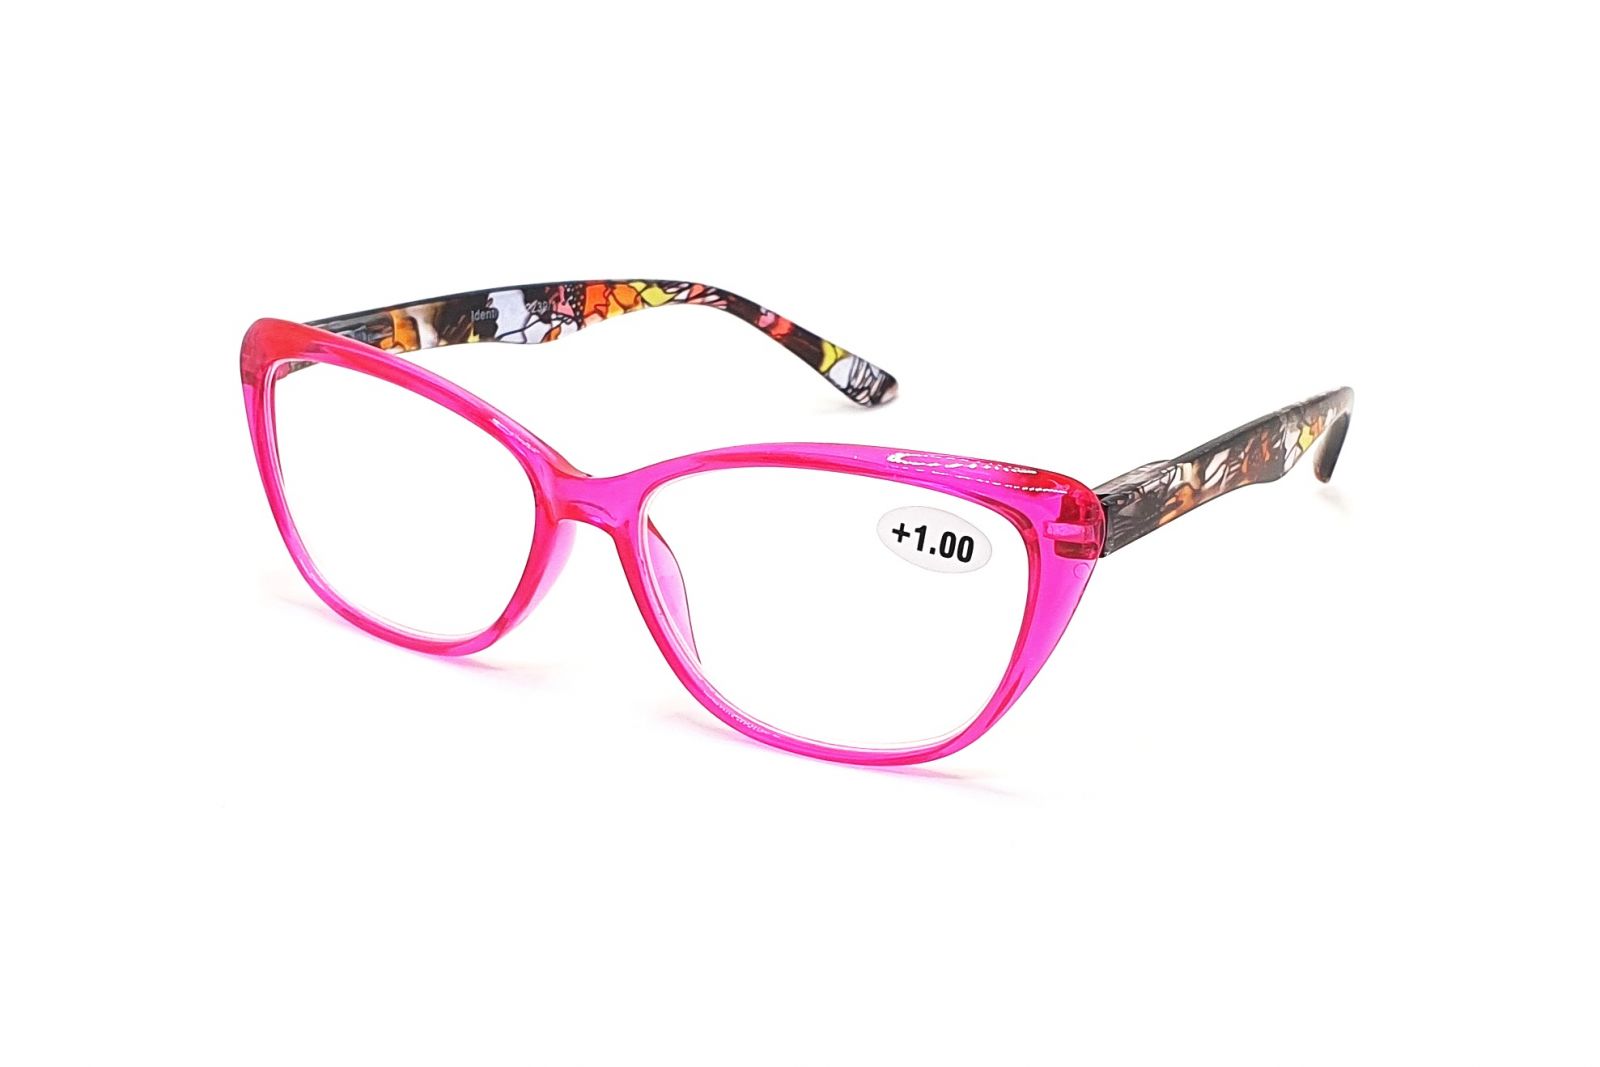 Dioptrické brýle MC2239 +1,00 flex pink